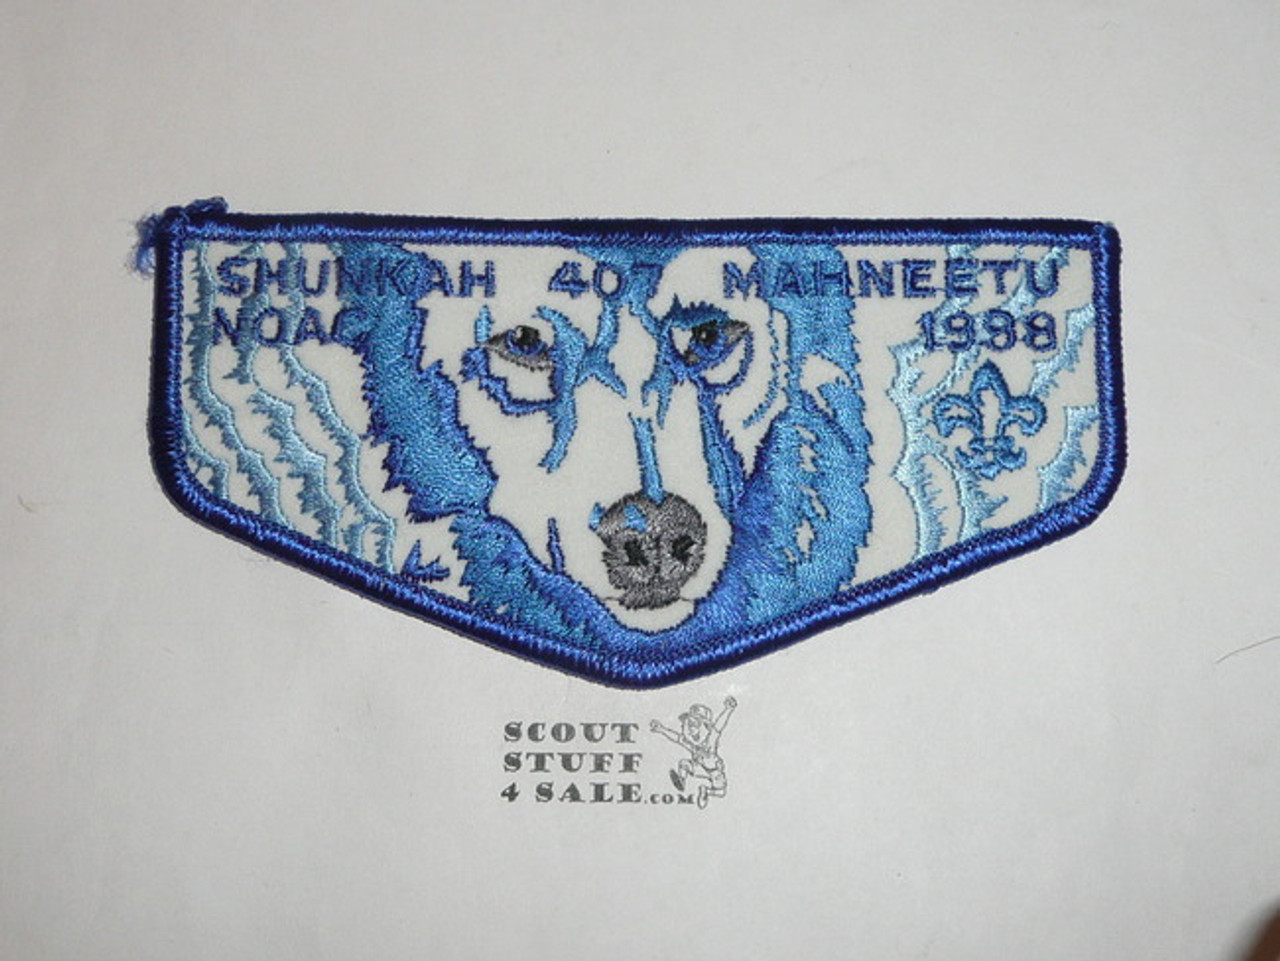 Order of the Arrow Lodge #407 Shunkah Mahneetu f7 1998 NOAC Flap Patch - Boy Scout